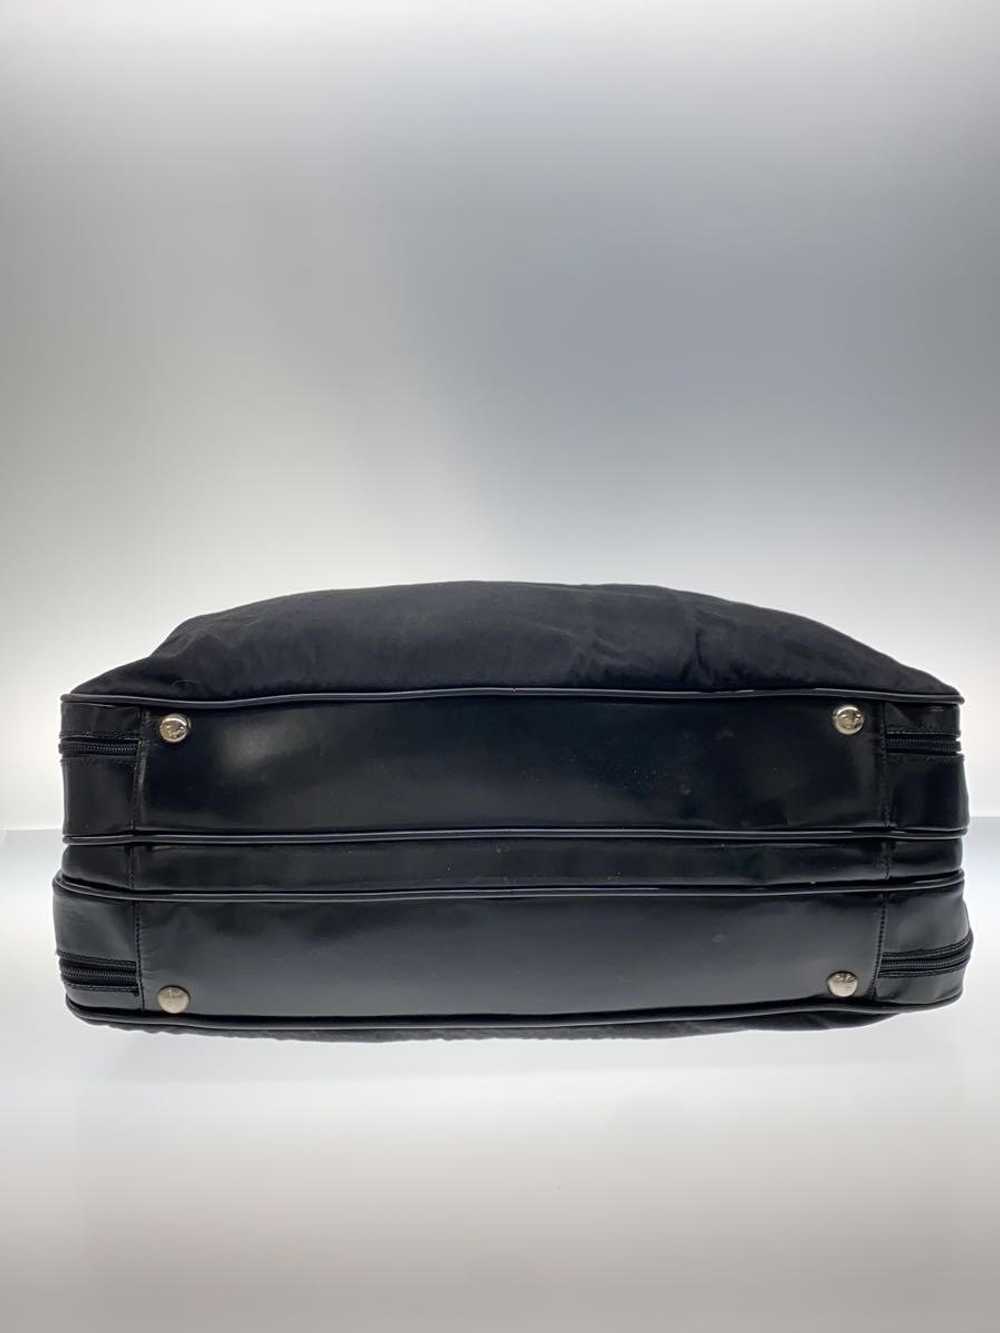 Used Gucci Boston Bag/Leather/Blk Bag - image 4